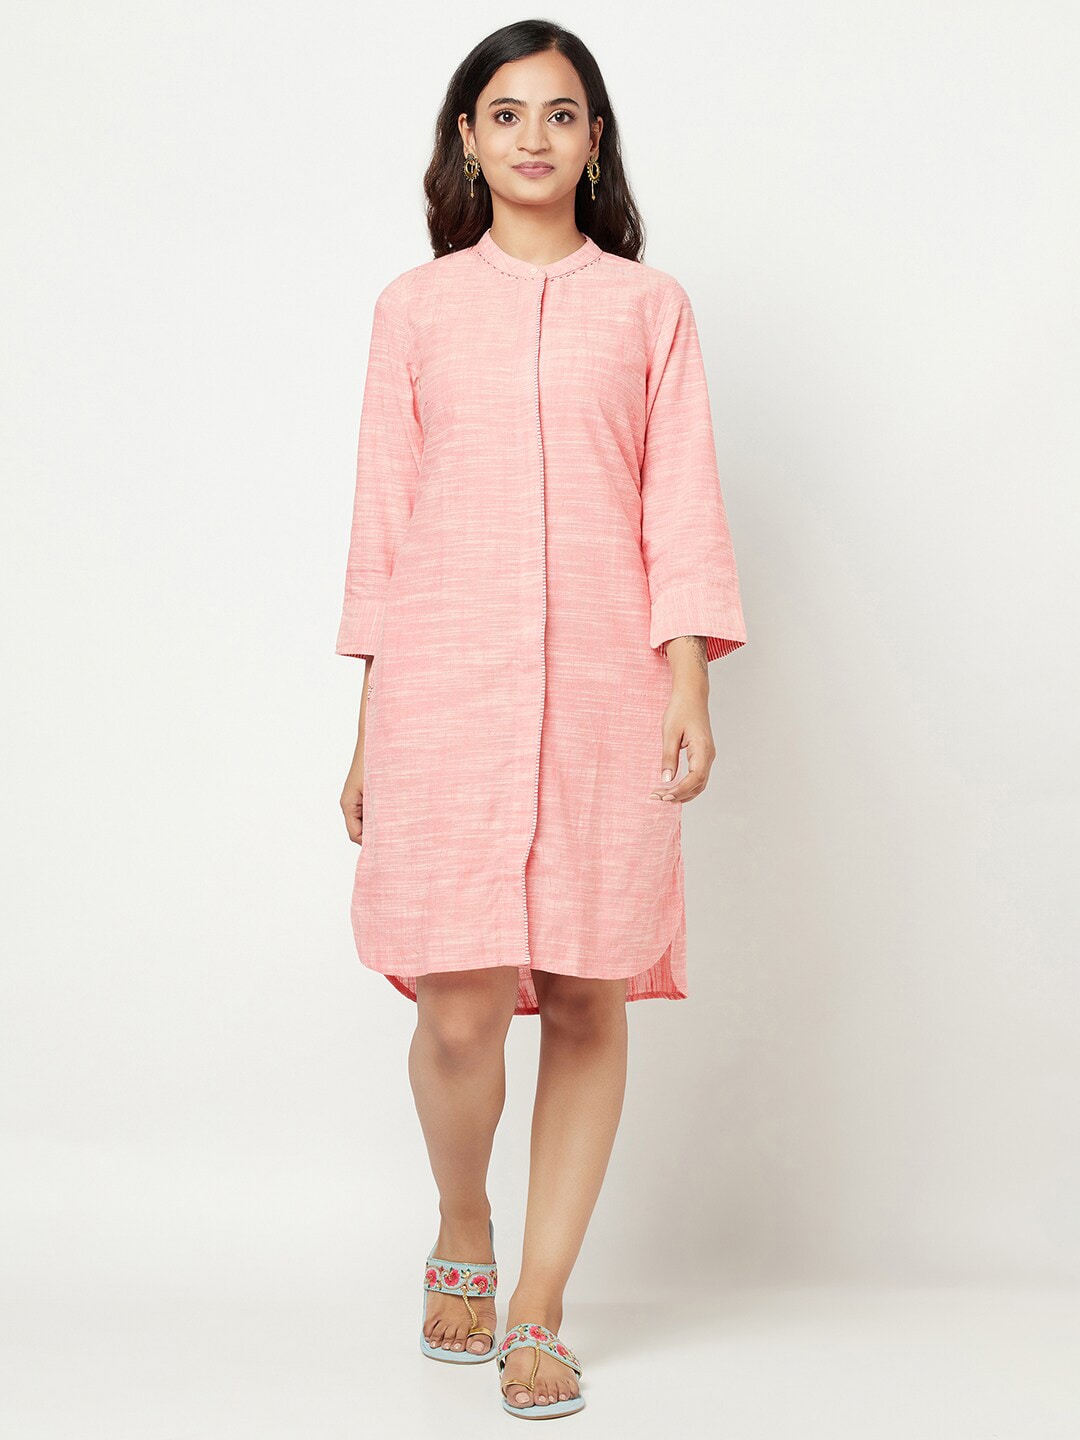 Fabindia Pink Shirt Dress Price in India